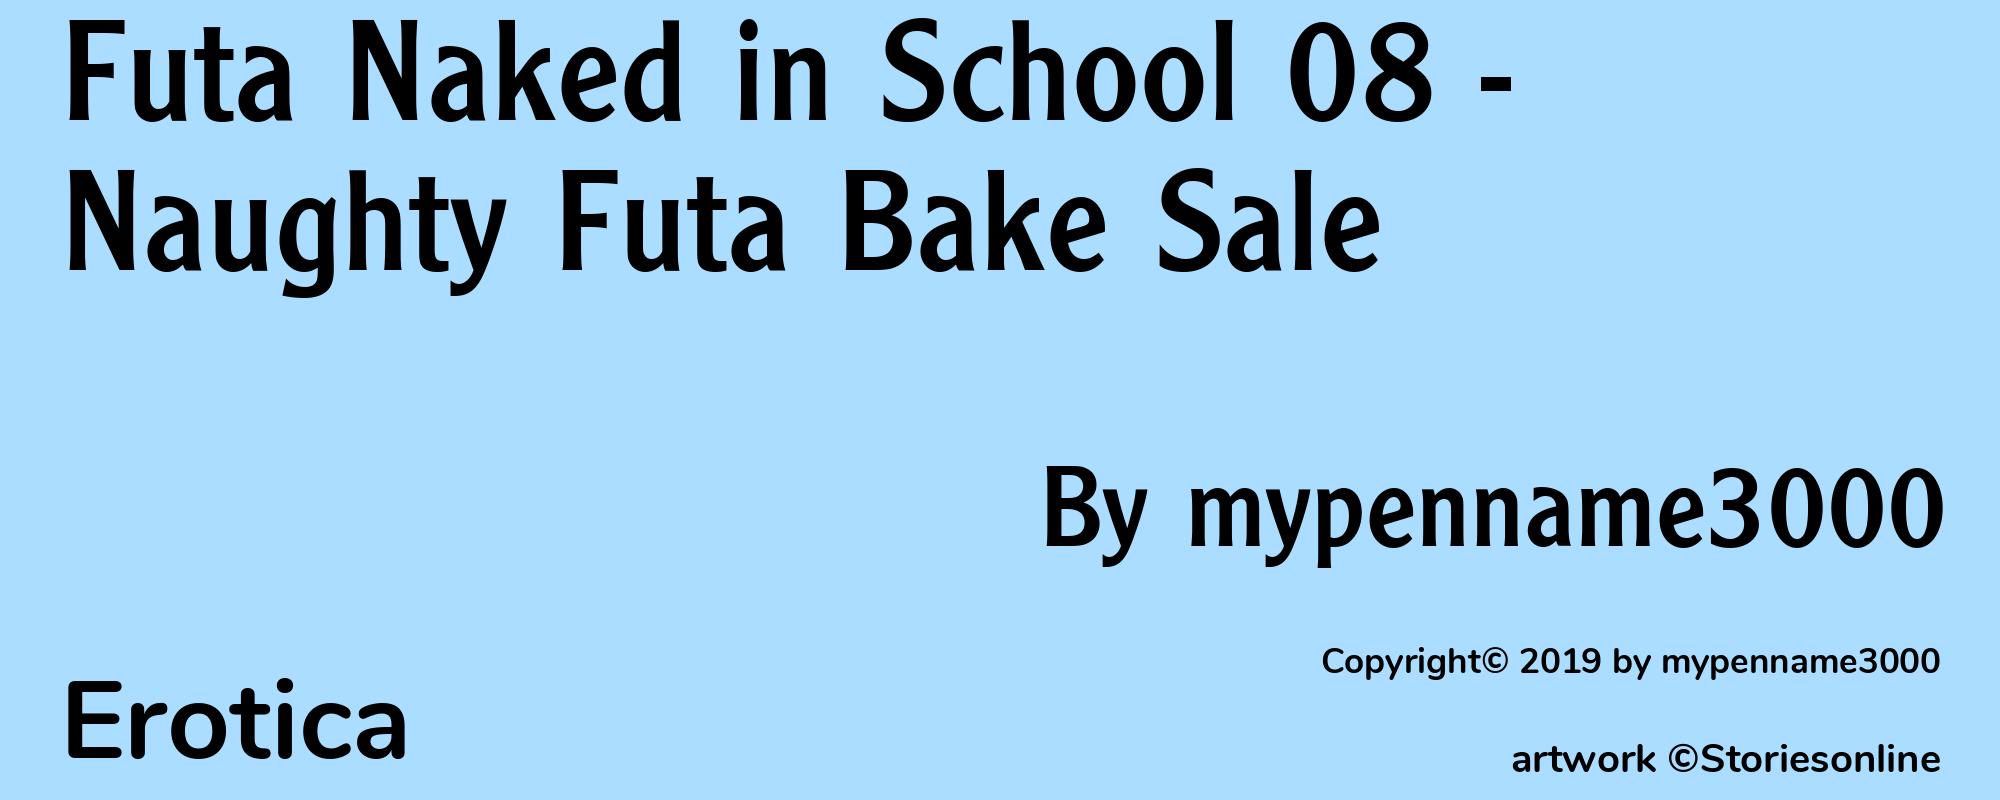 Futa Naked in School 08 - Naughty Futa Bake Sale - Cover